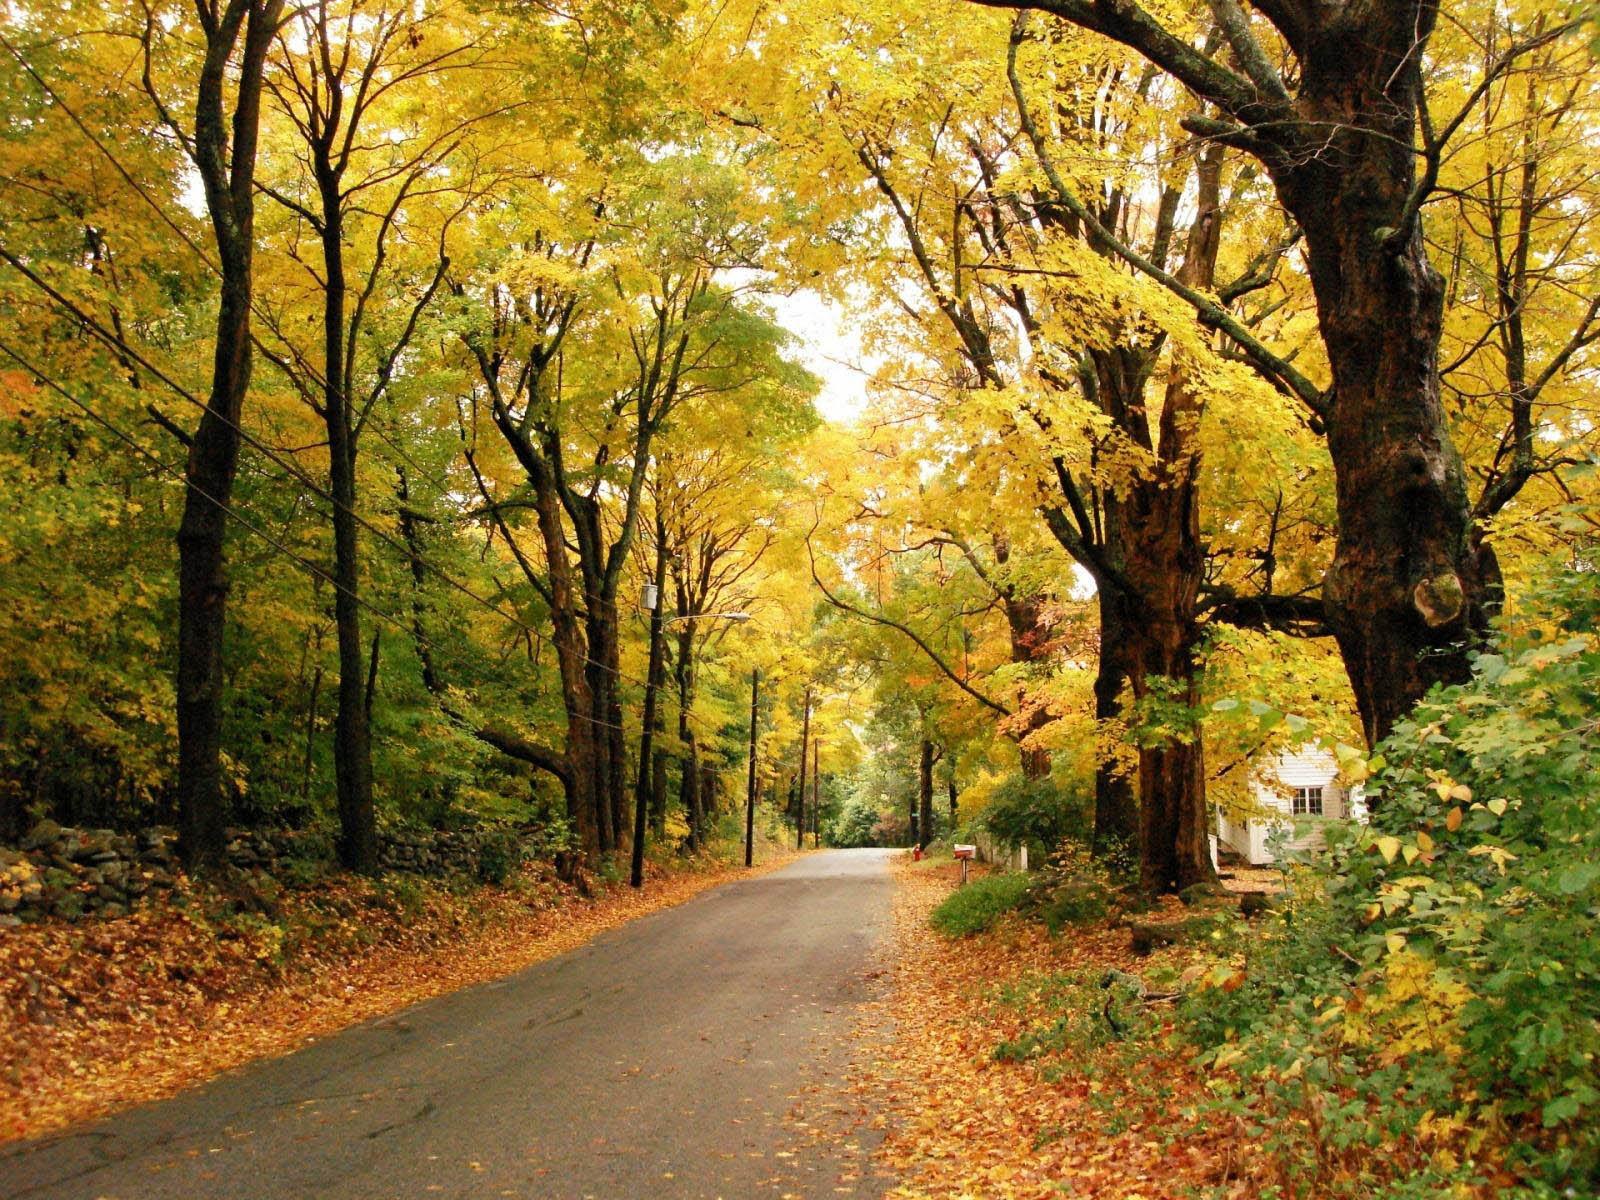 Beautiful Autumn Road Scenery Wallpaper | Scenery Backgrounds